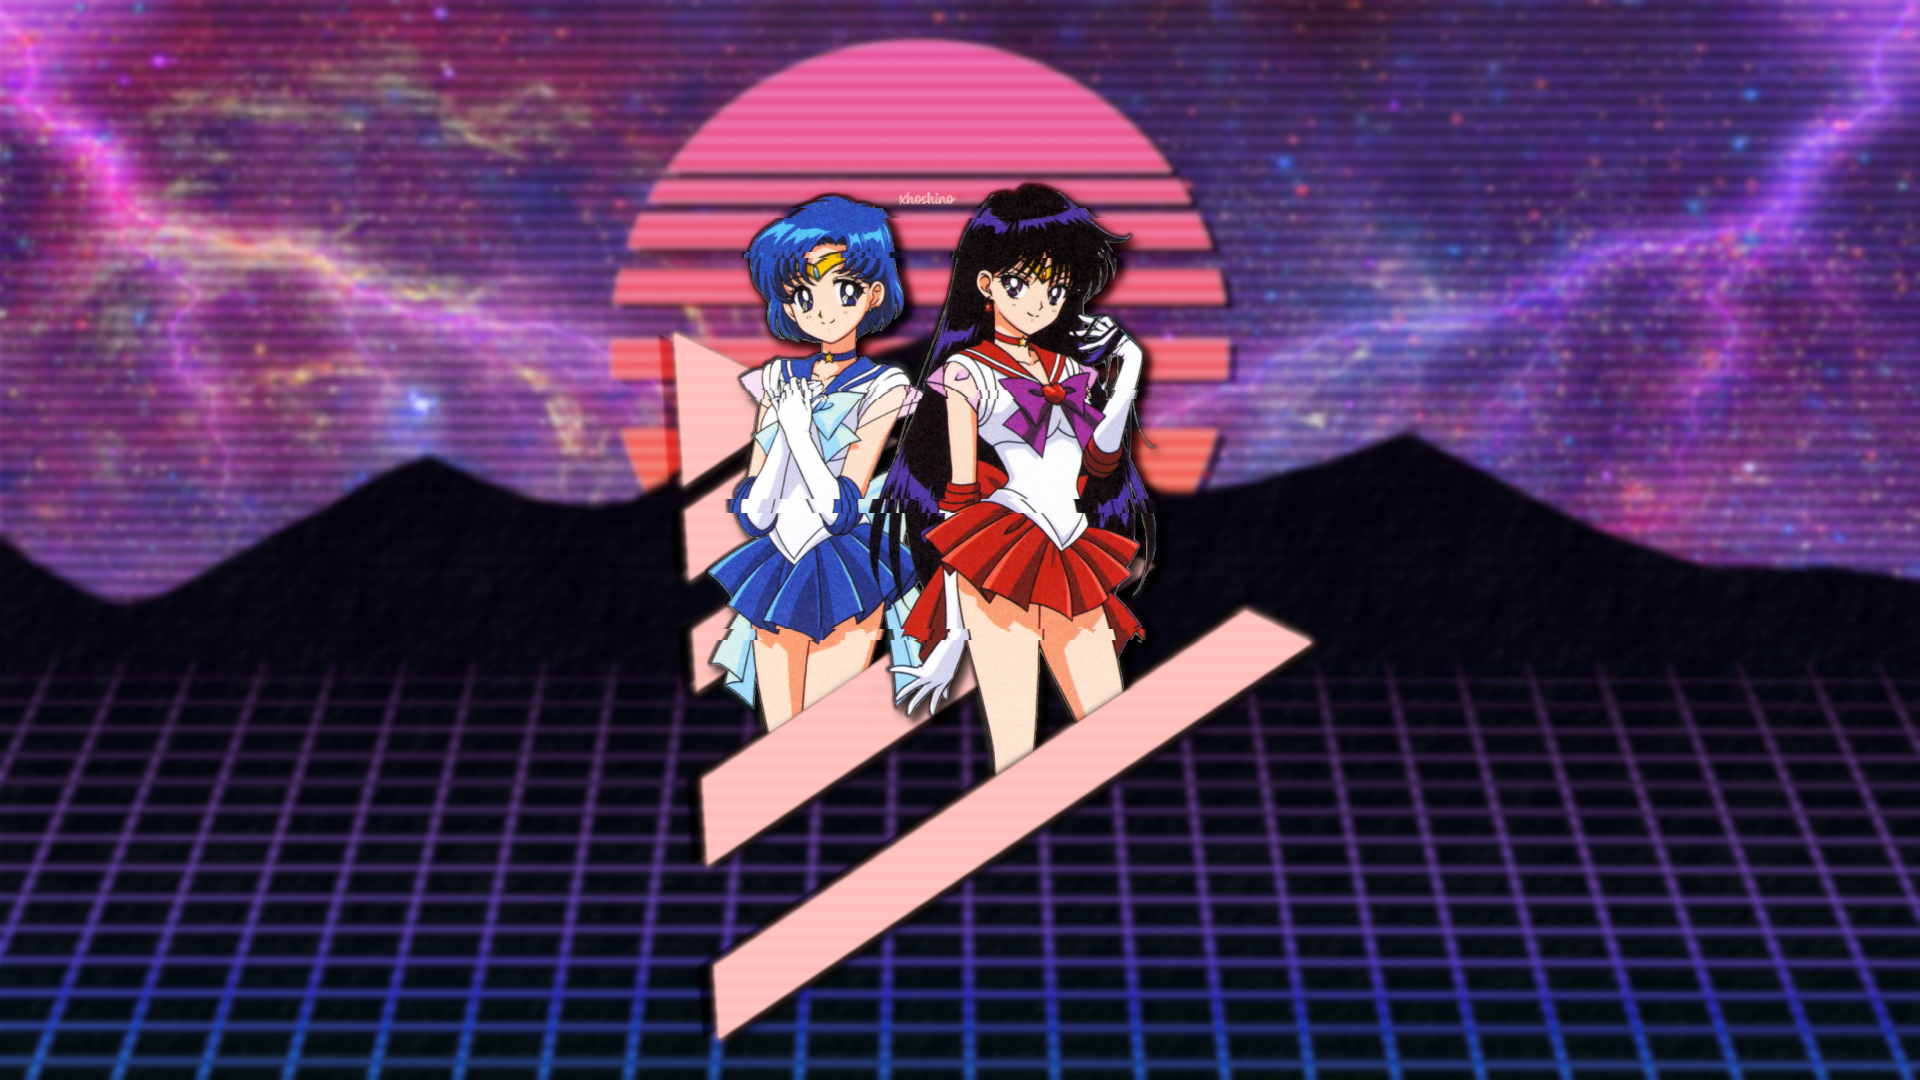 1920x1080 Wallpaper : anime, girls, Mercury, Sailor Moon, Saturn, vaporwave, wallpaper xhoshino 1510791 HD Wallpapers